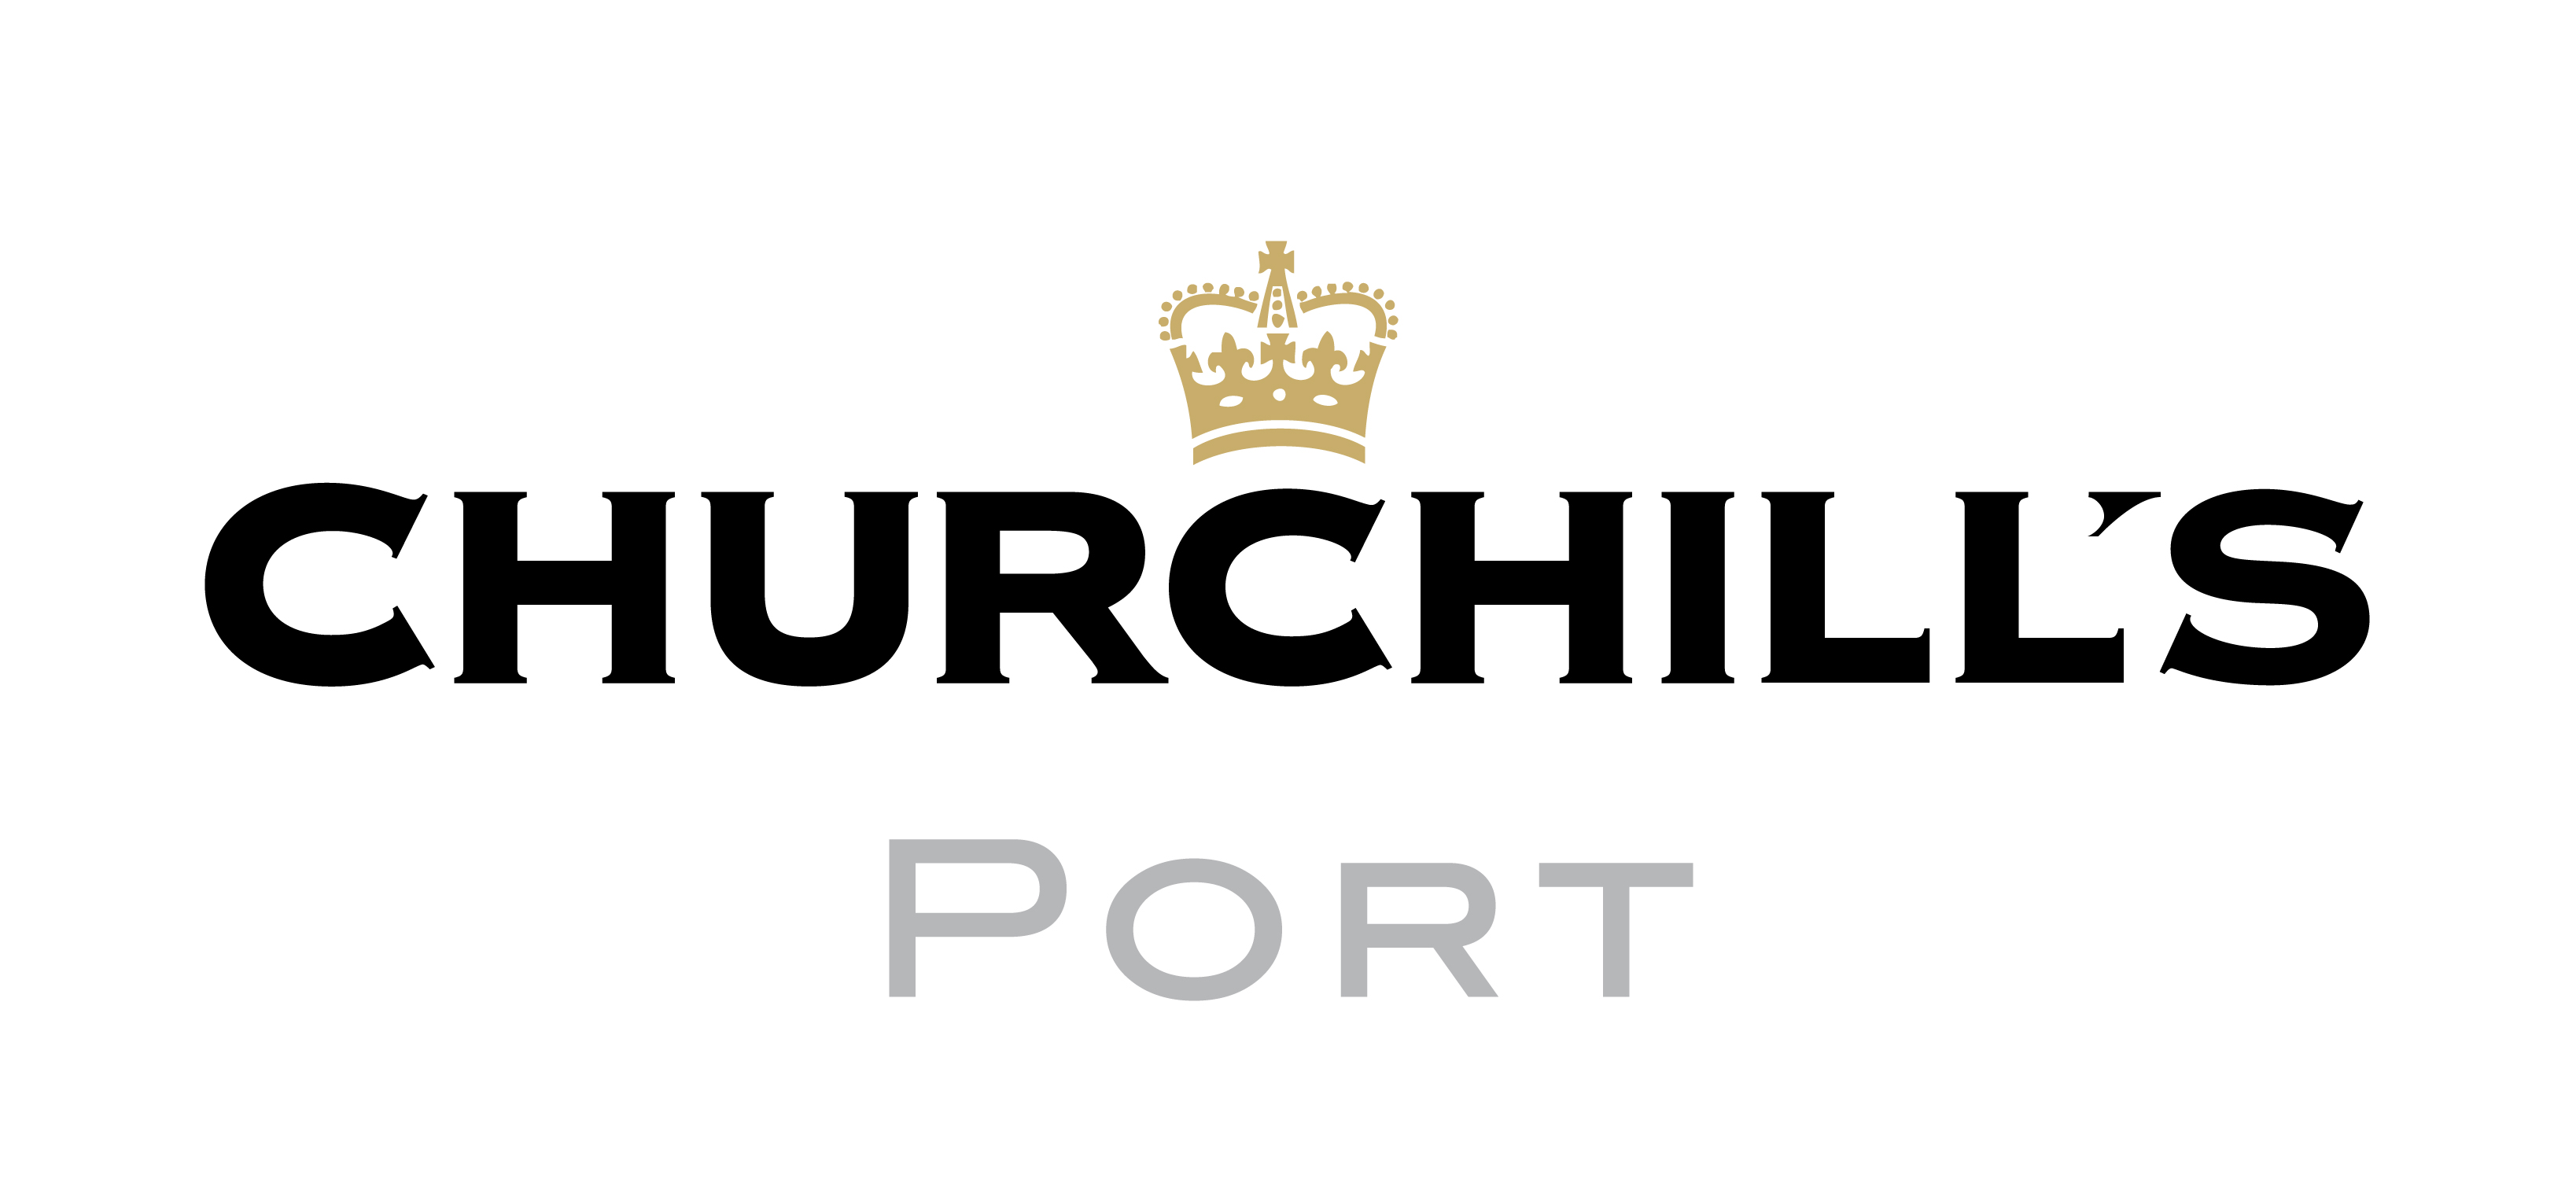 Churchills_Port